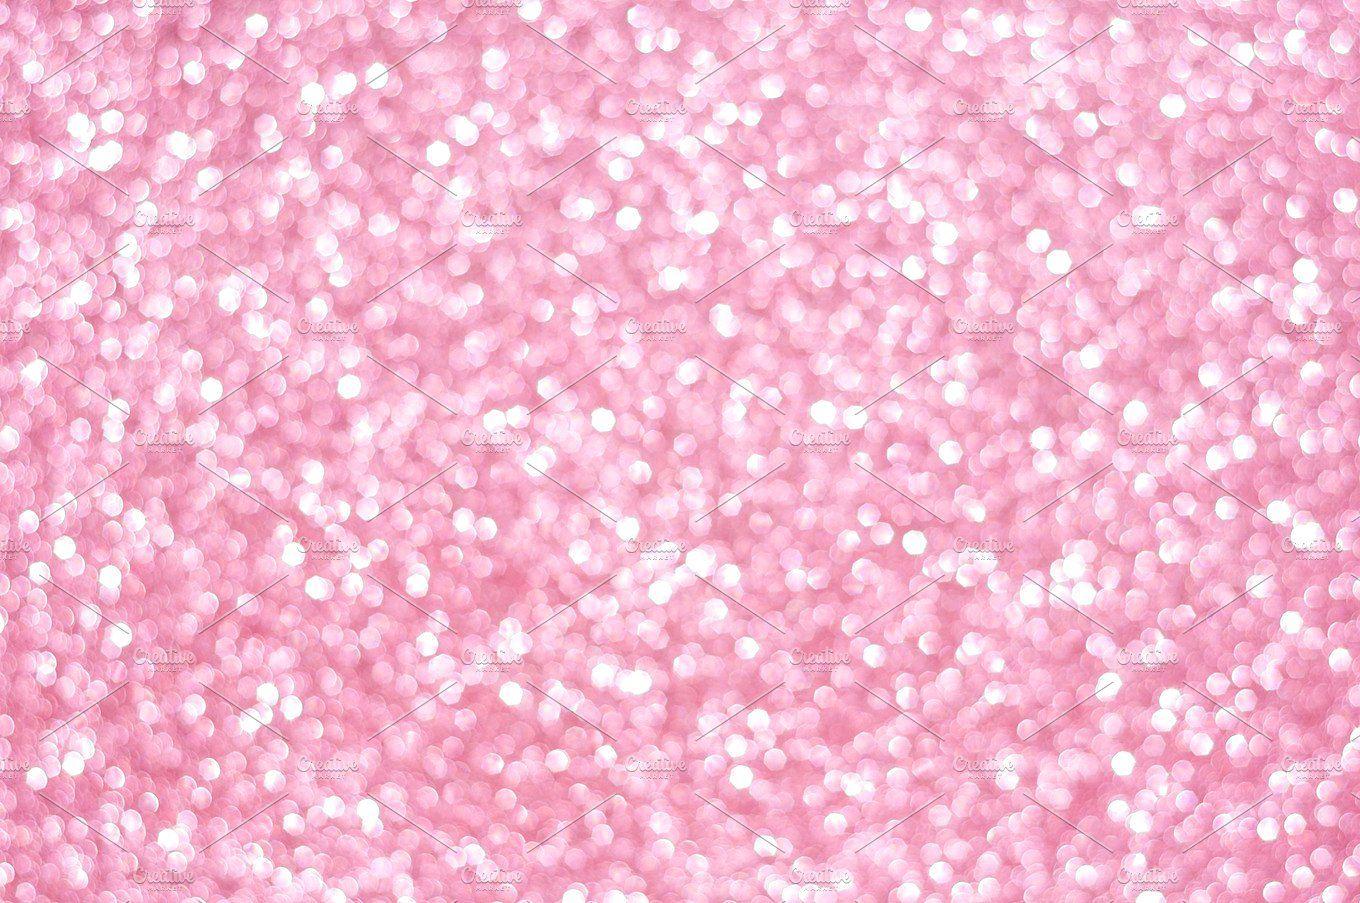 Pink Glitter Abstract Photo Creative Market